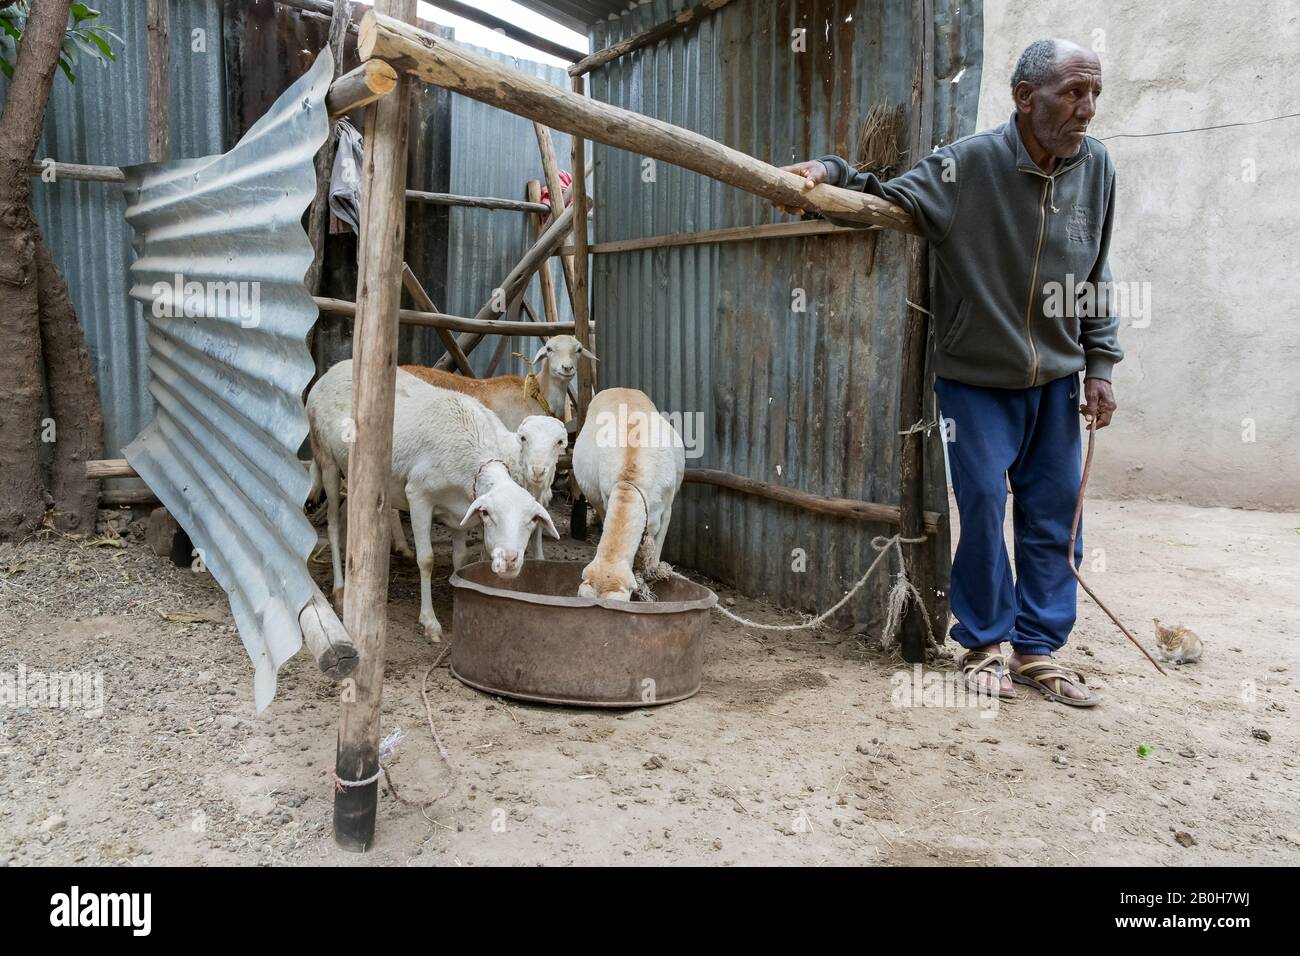 07.11.2019, Adama, Oromiyaa, Äthiopien - Älterer Mann lehnt sich an einen offenen Ziegenschuppen aus Wellblech an. Im Stall gibt es vier Ziegen. Frauen a Stockfoto